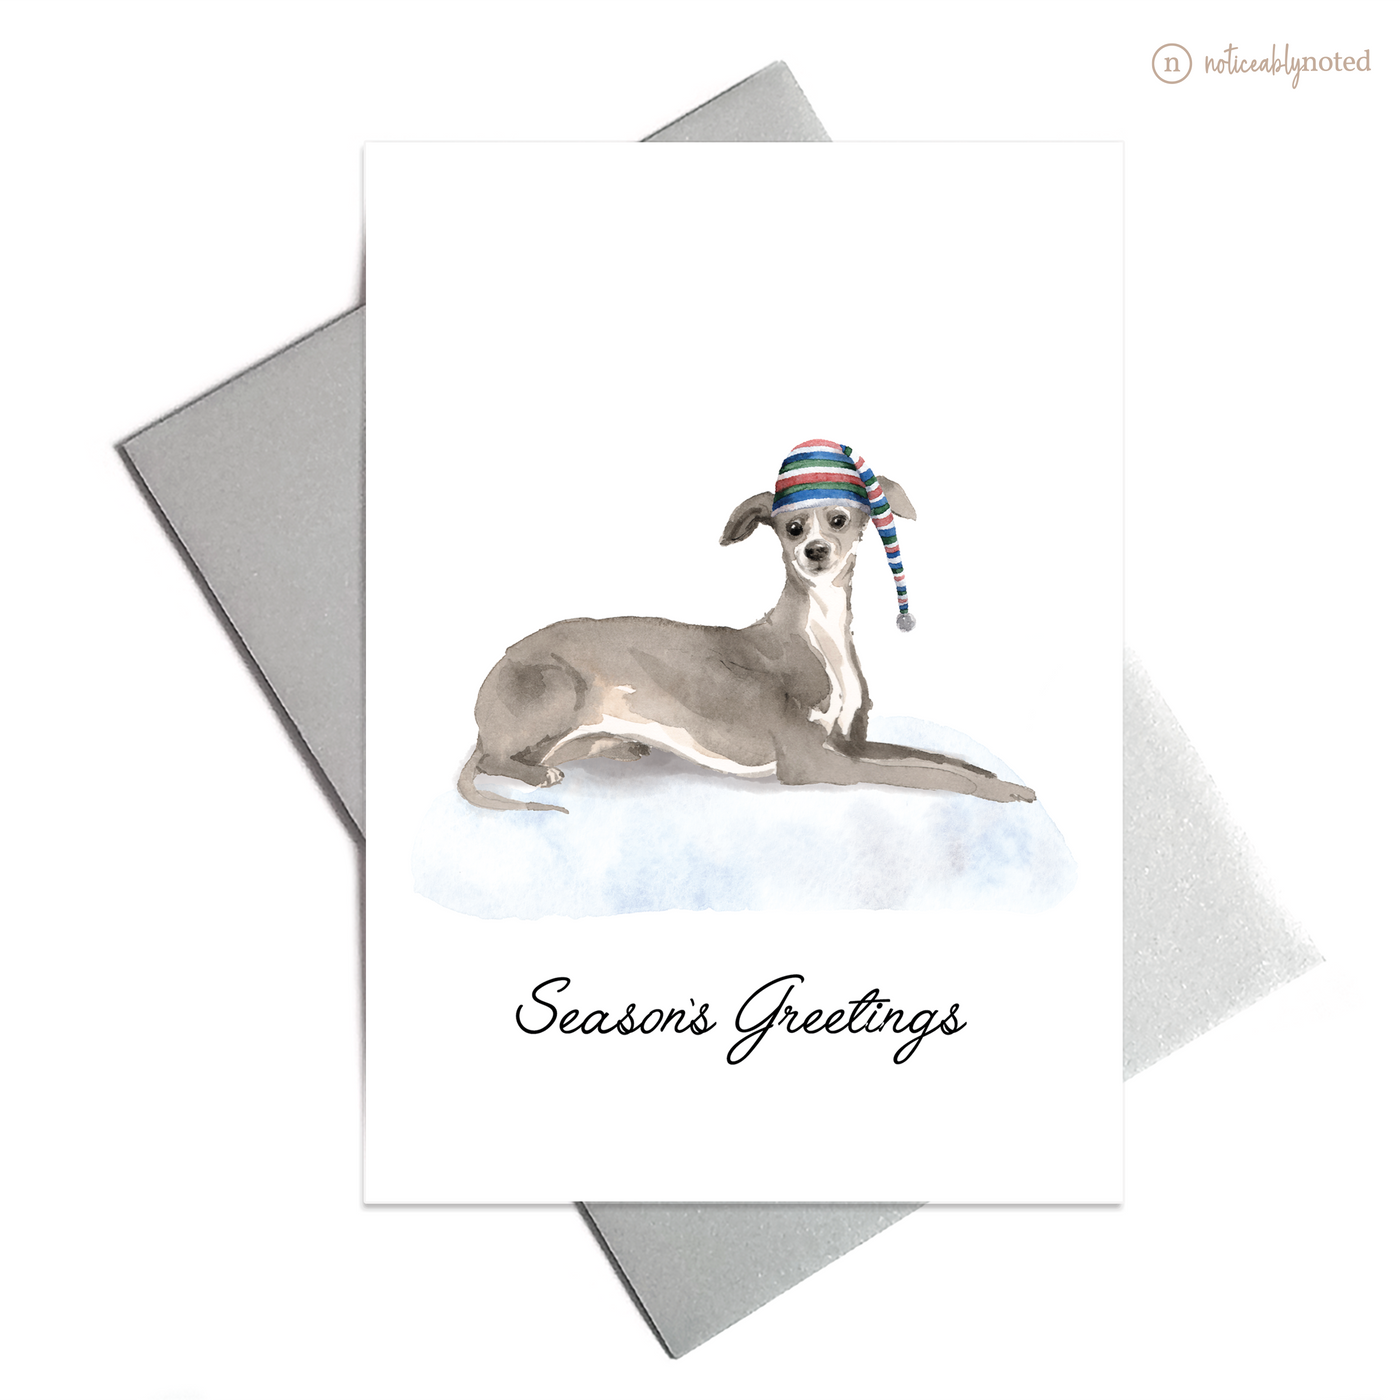 Italian Greyhound Dog Christmas Card | Noticeably Noted